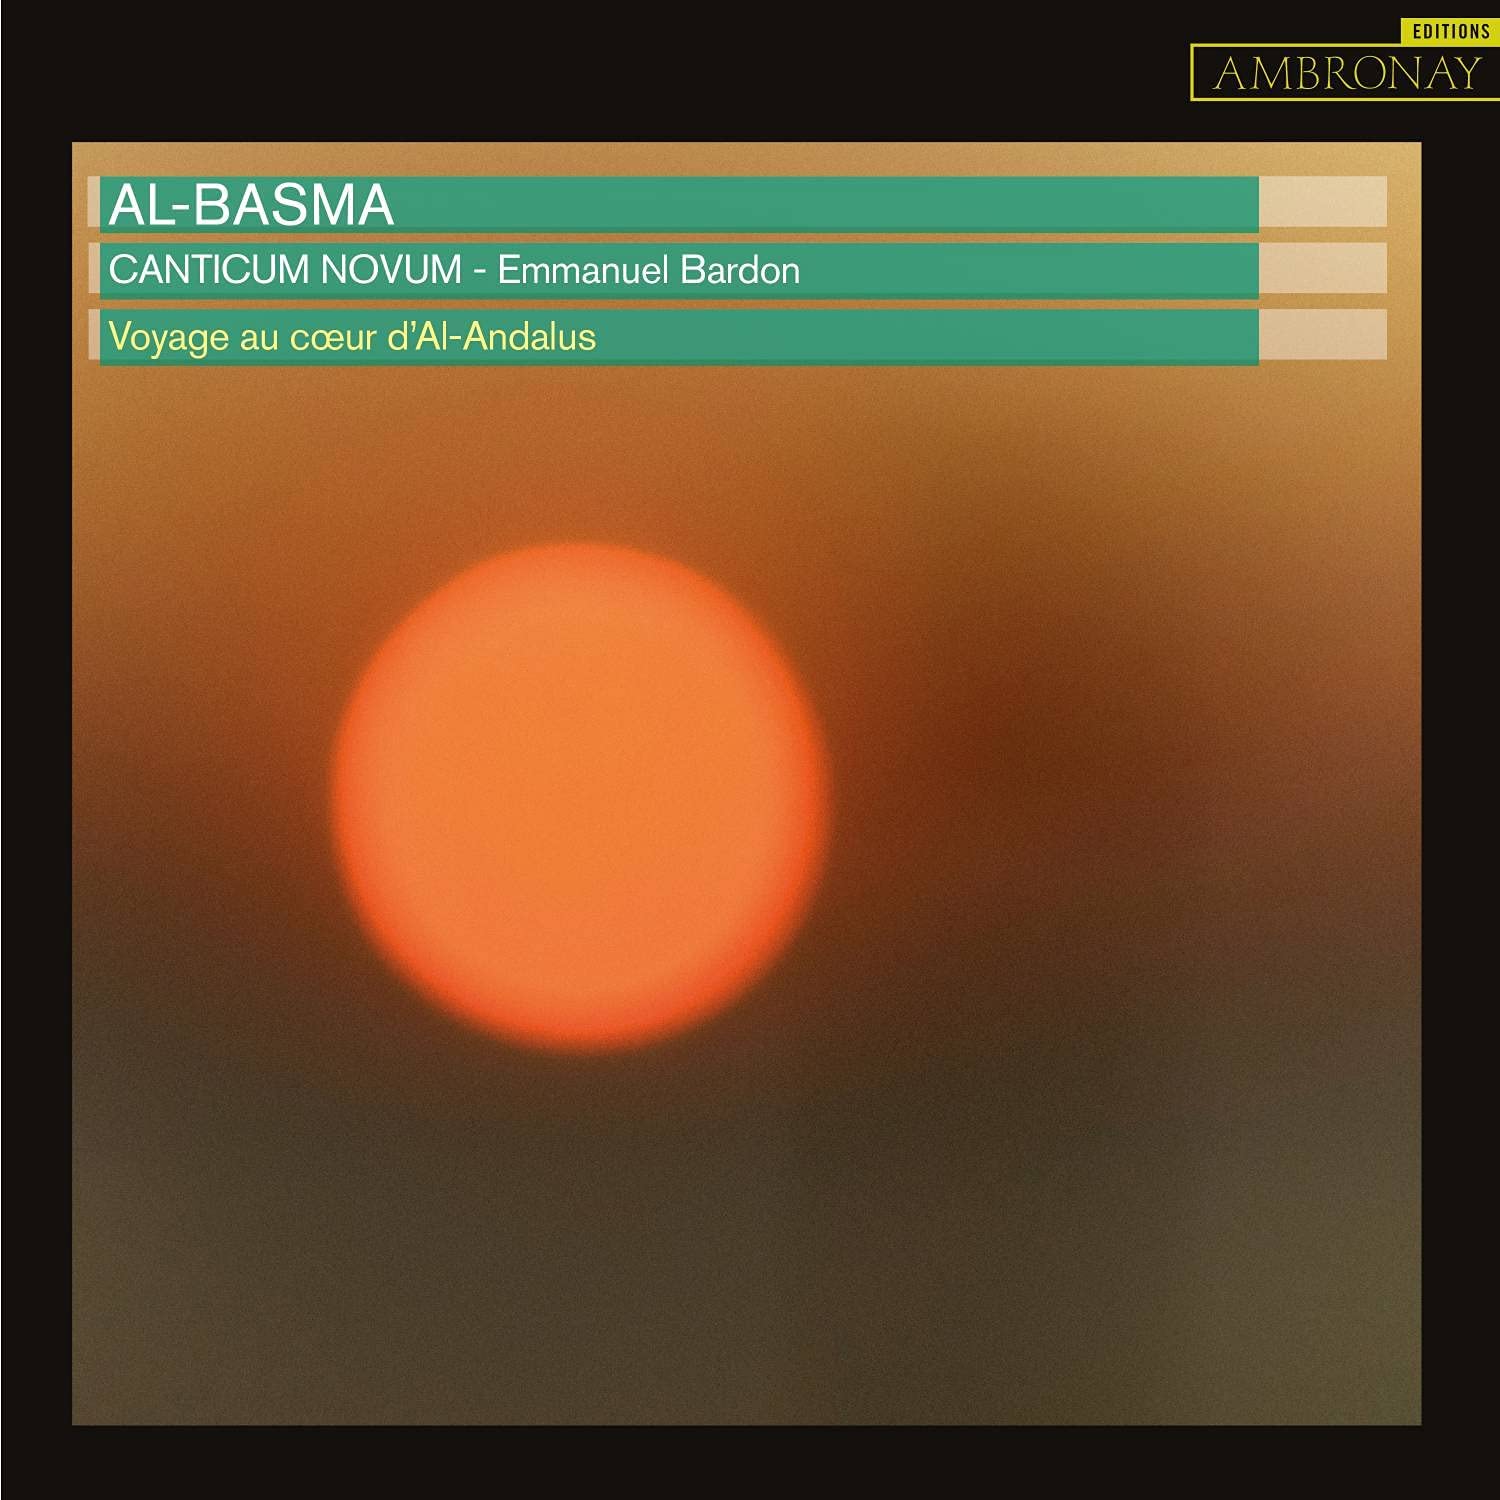 CD cover of Al-Basma Canticum novum